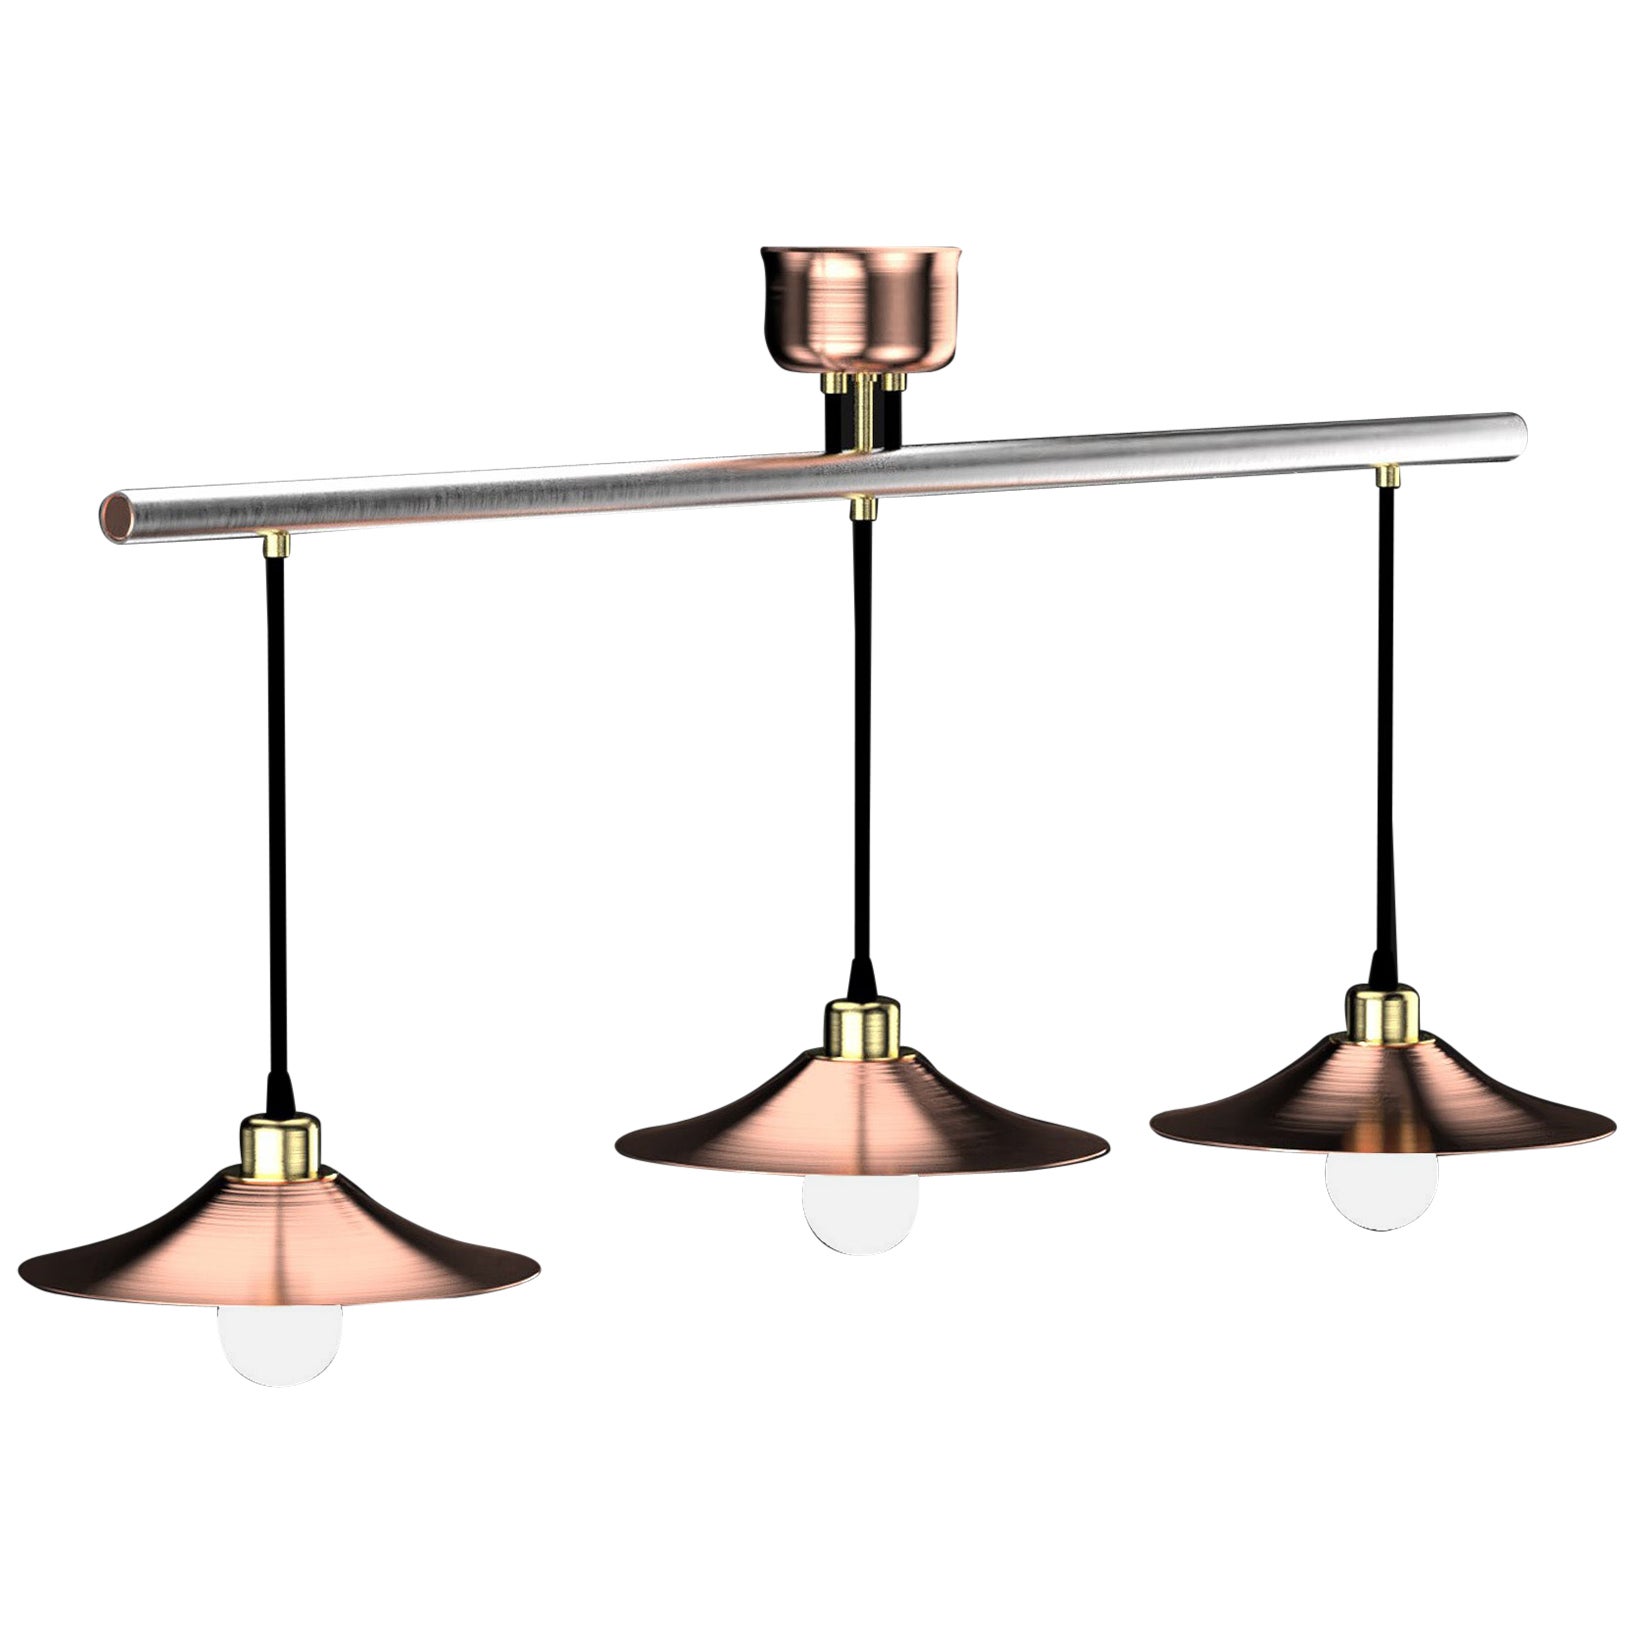 Edimate Genuine Stainless Steel/Copper Ceiling Light